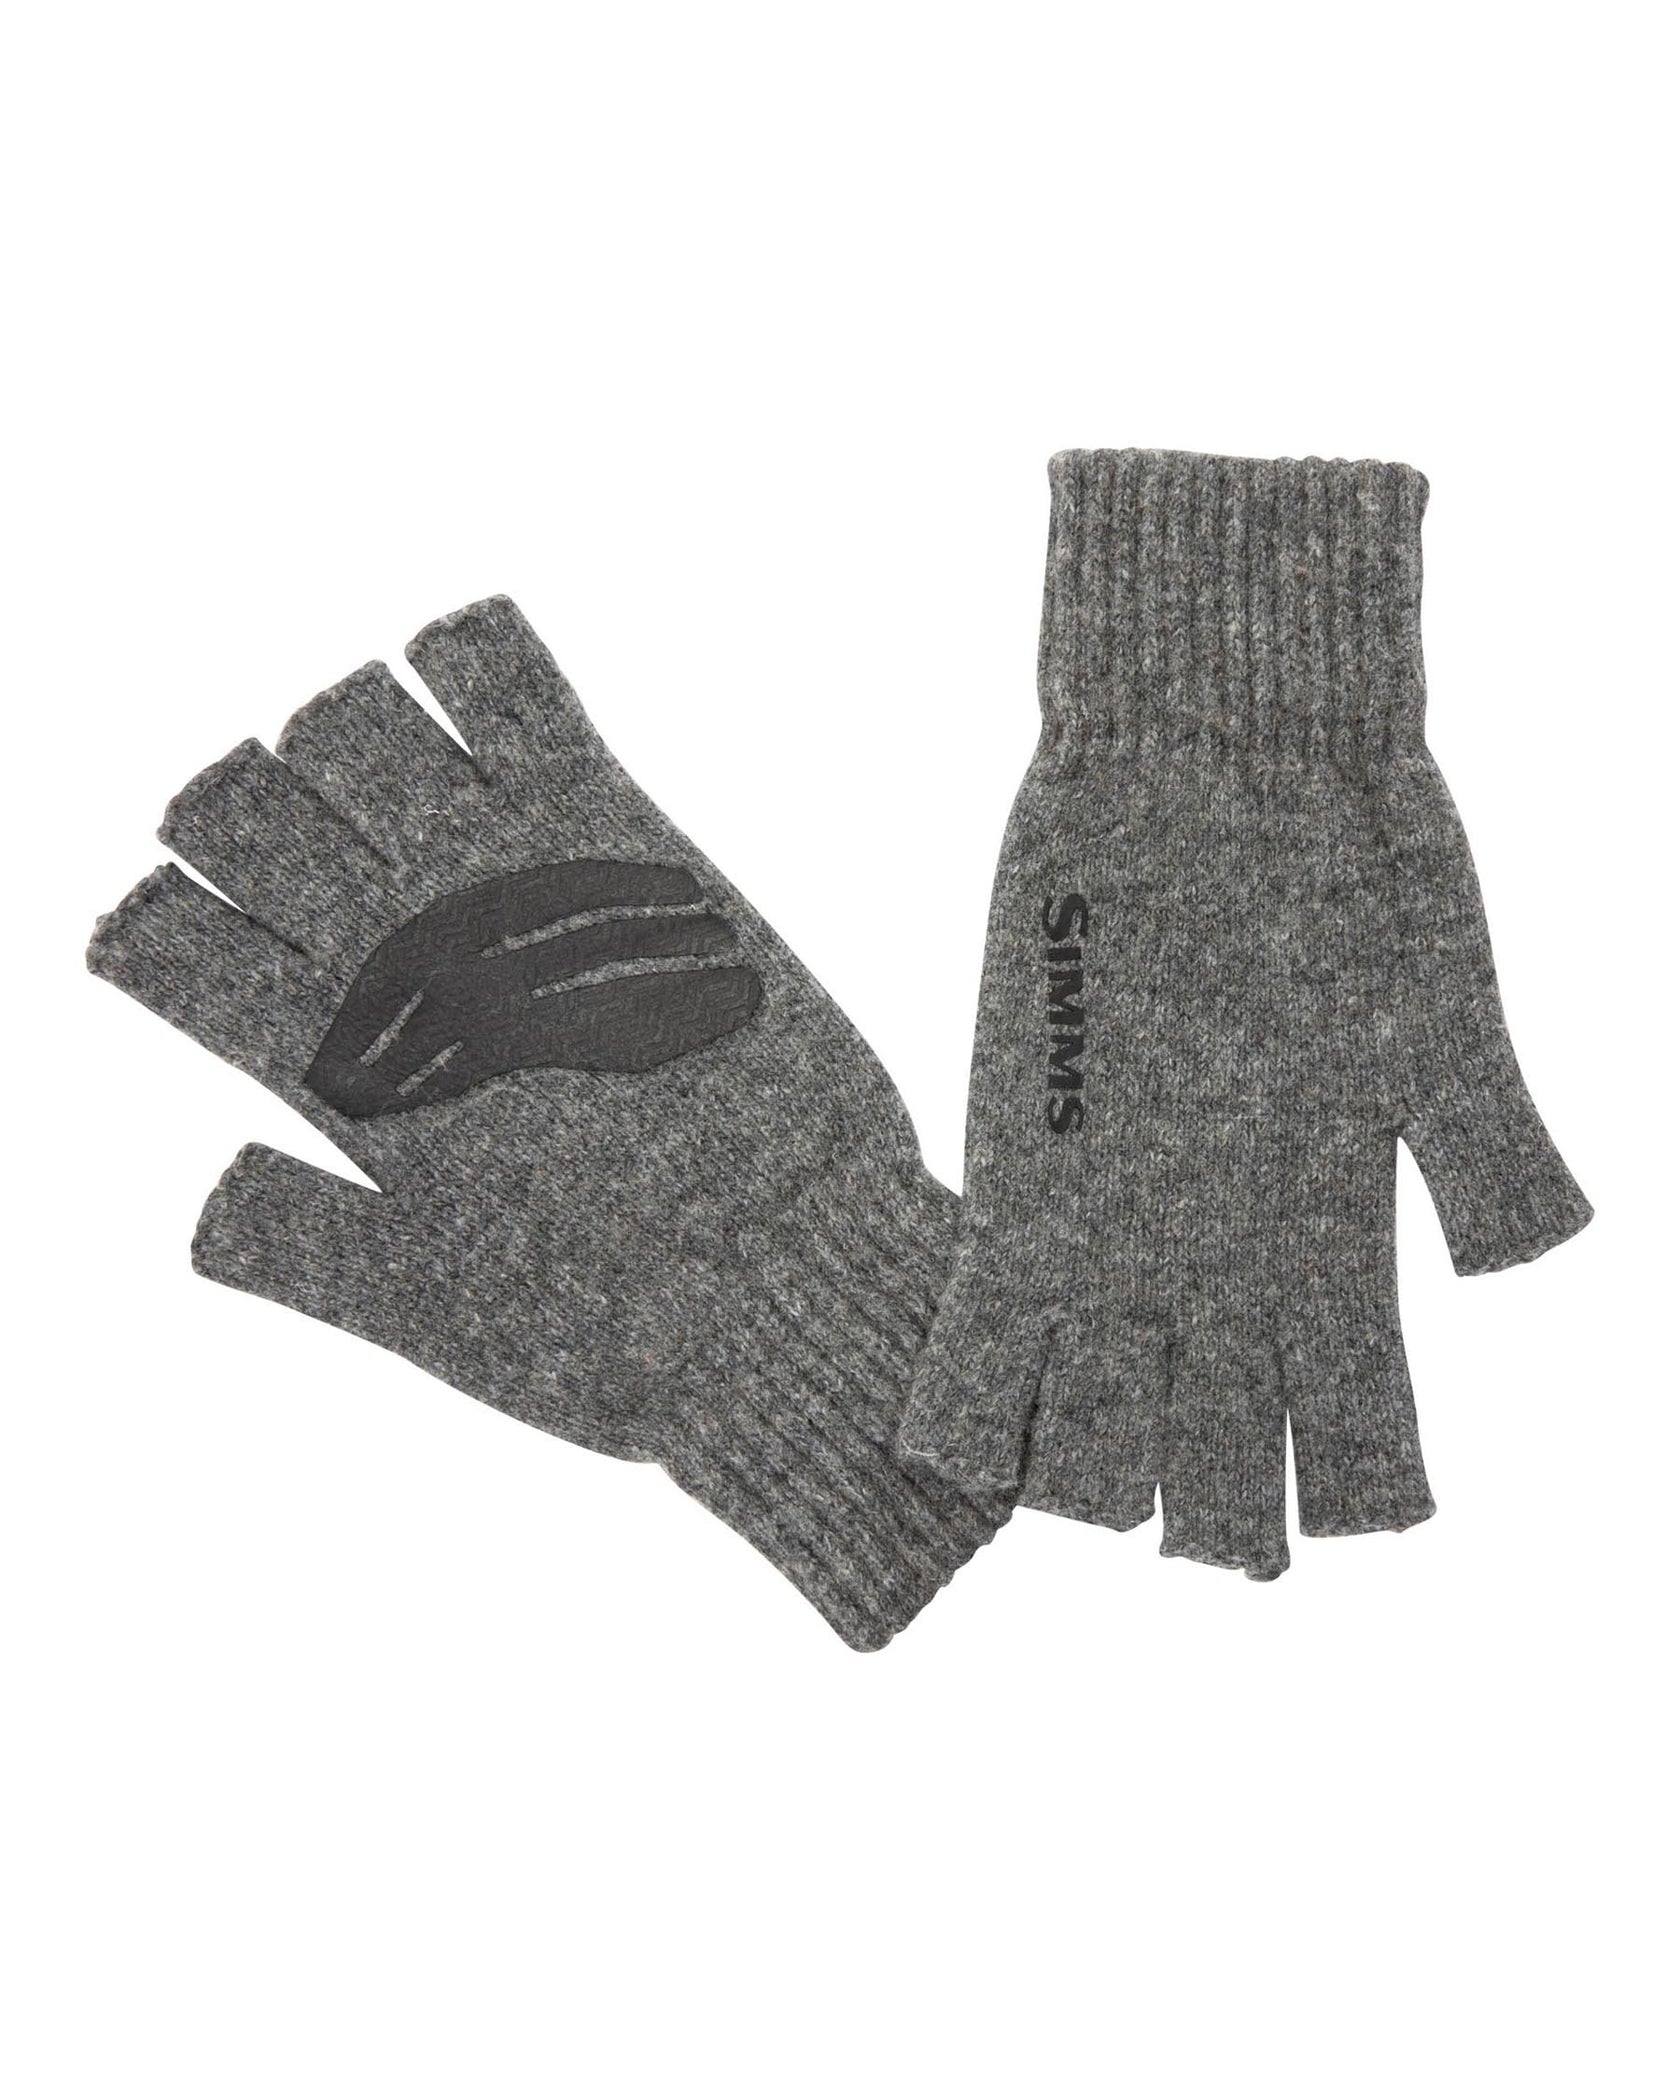 Simms Wool Half Finger Glove S/M